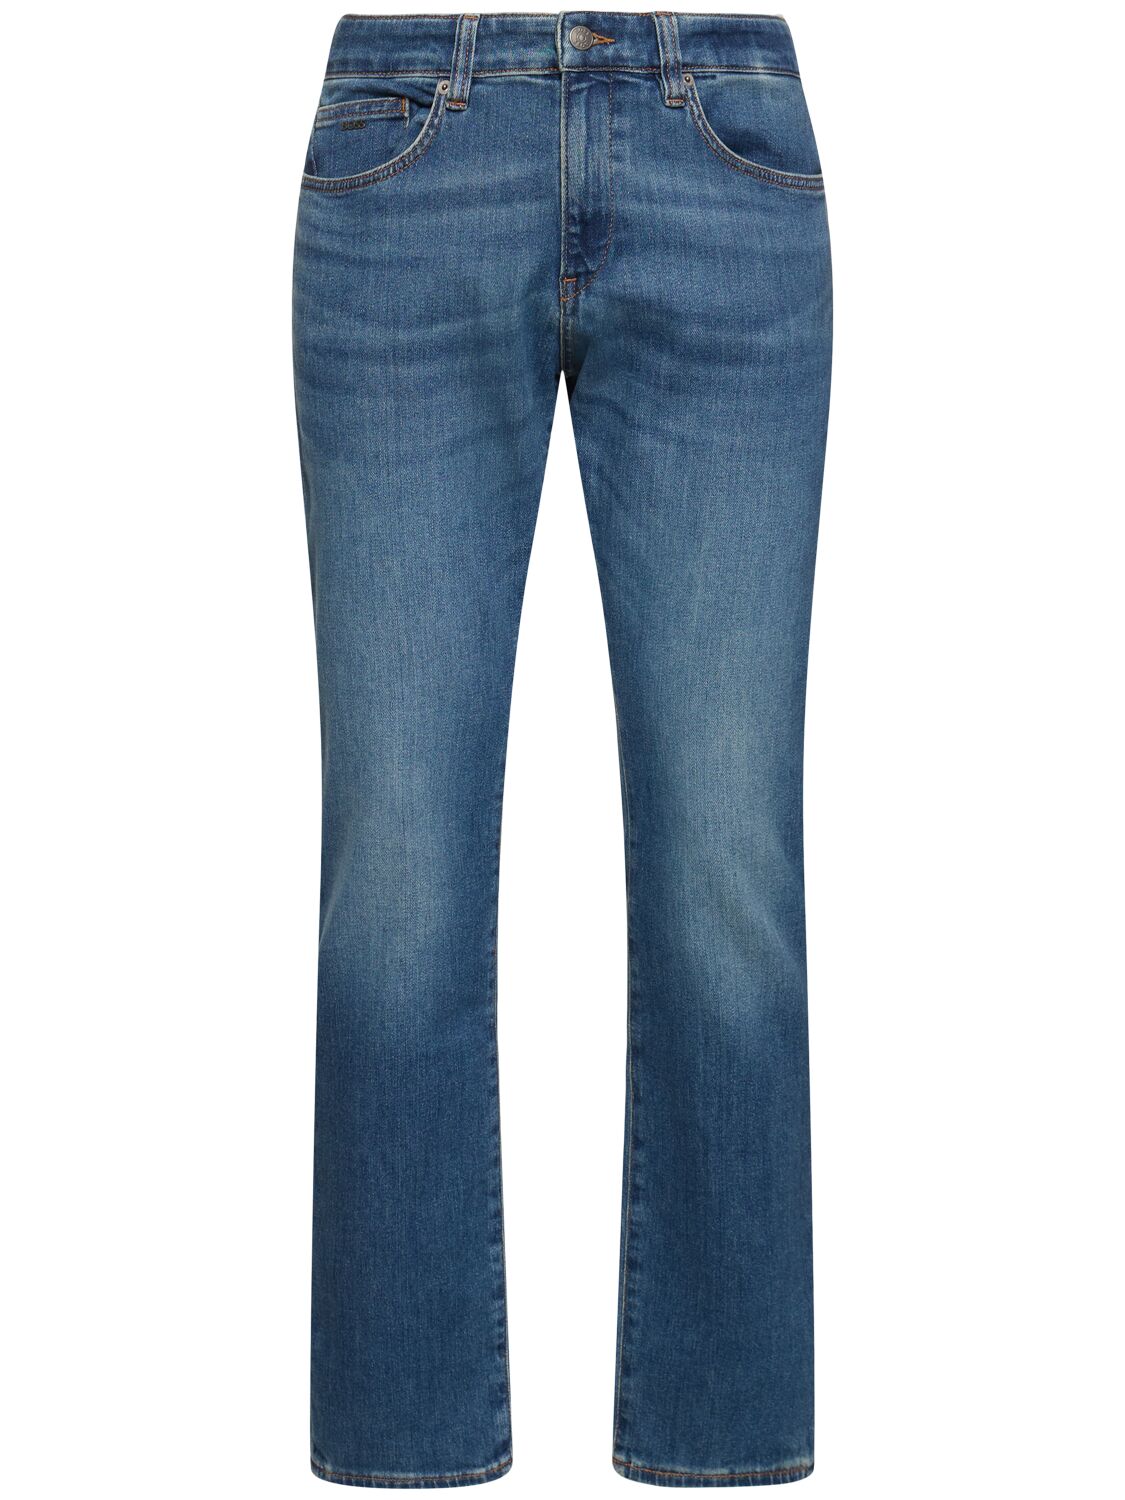 Delaware Cotton Denim Jeans